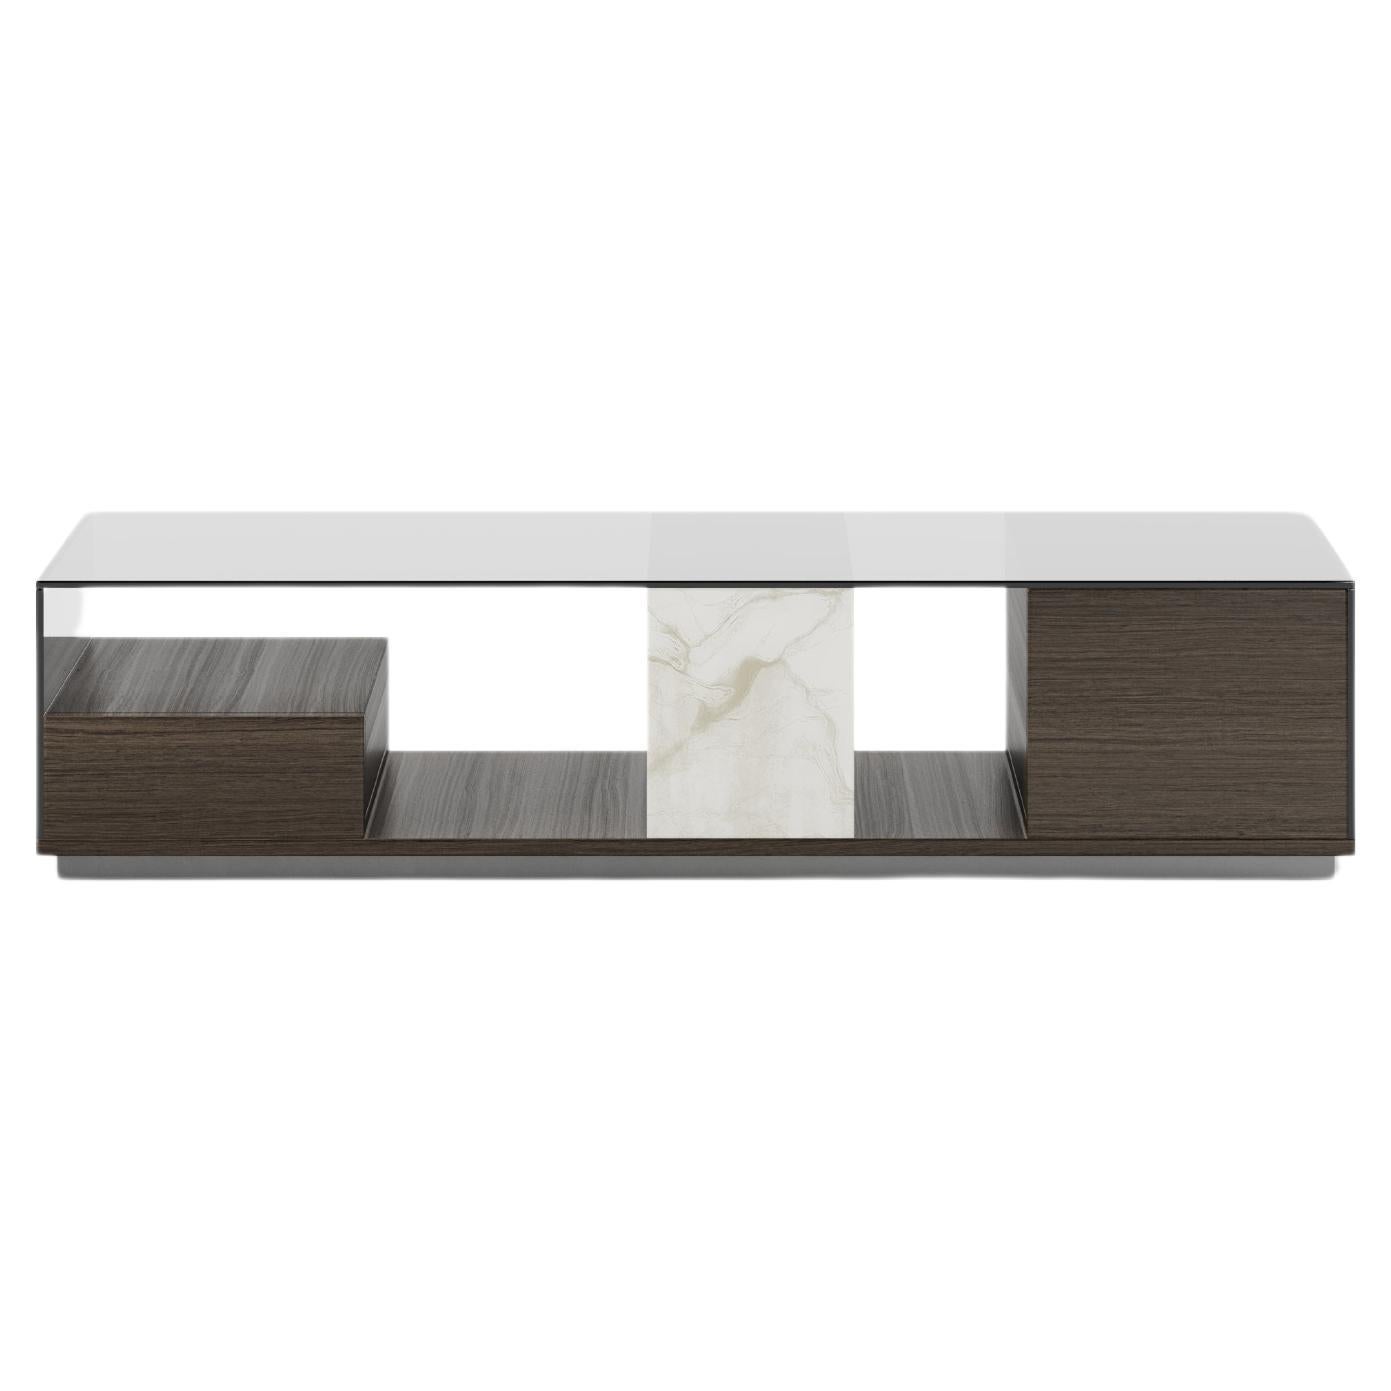 Ryan decorative coffee table, wood frame, smoked glass, marble, metal